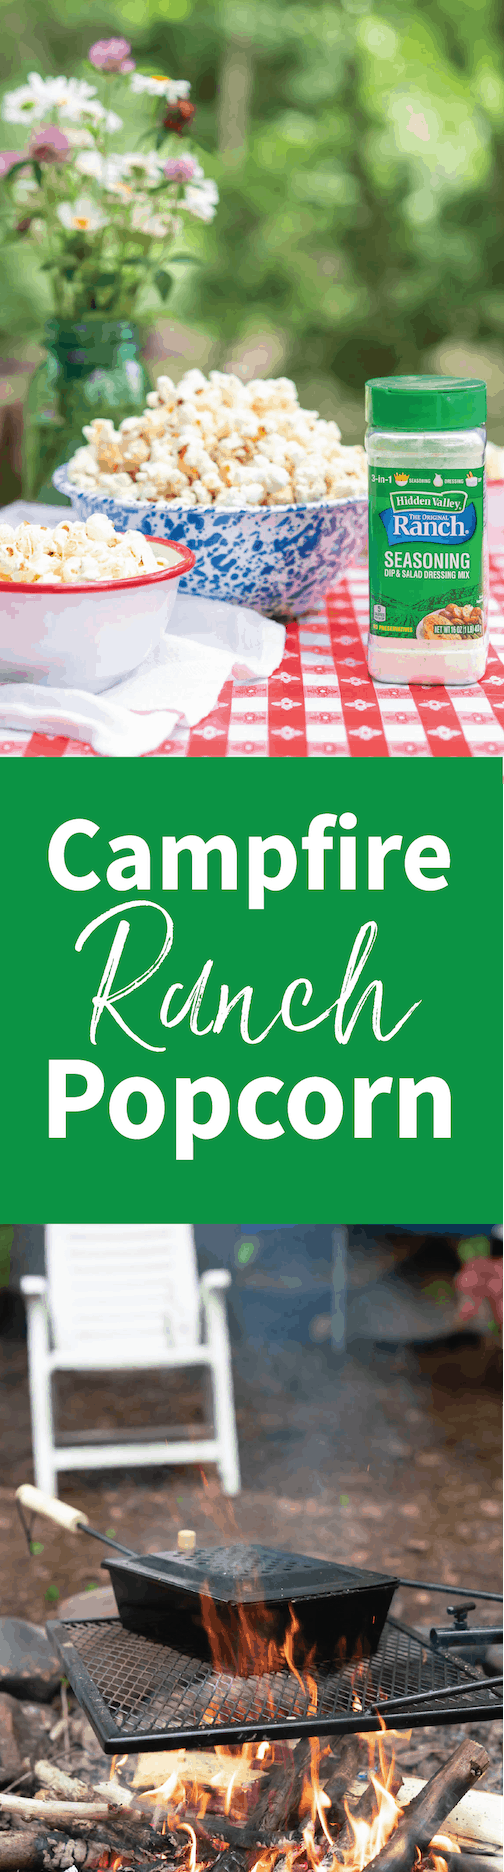 Campfire Ranch Popcorn #sponsored